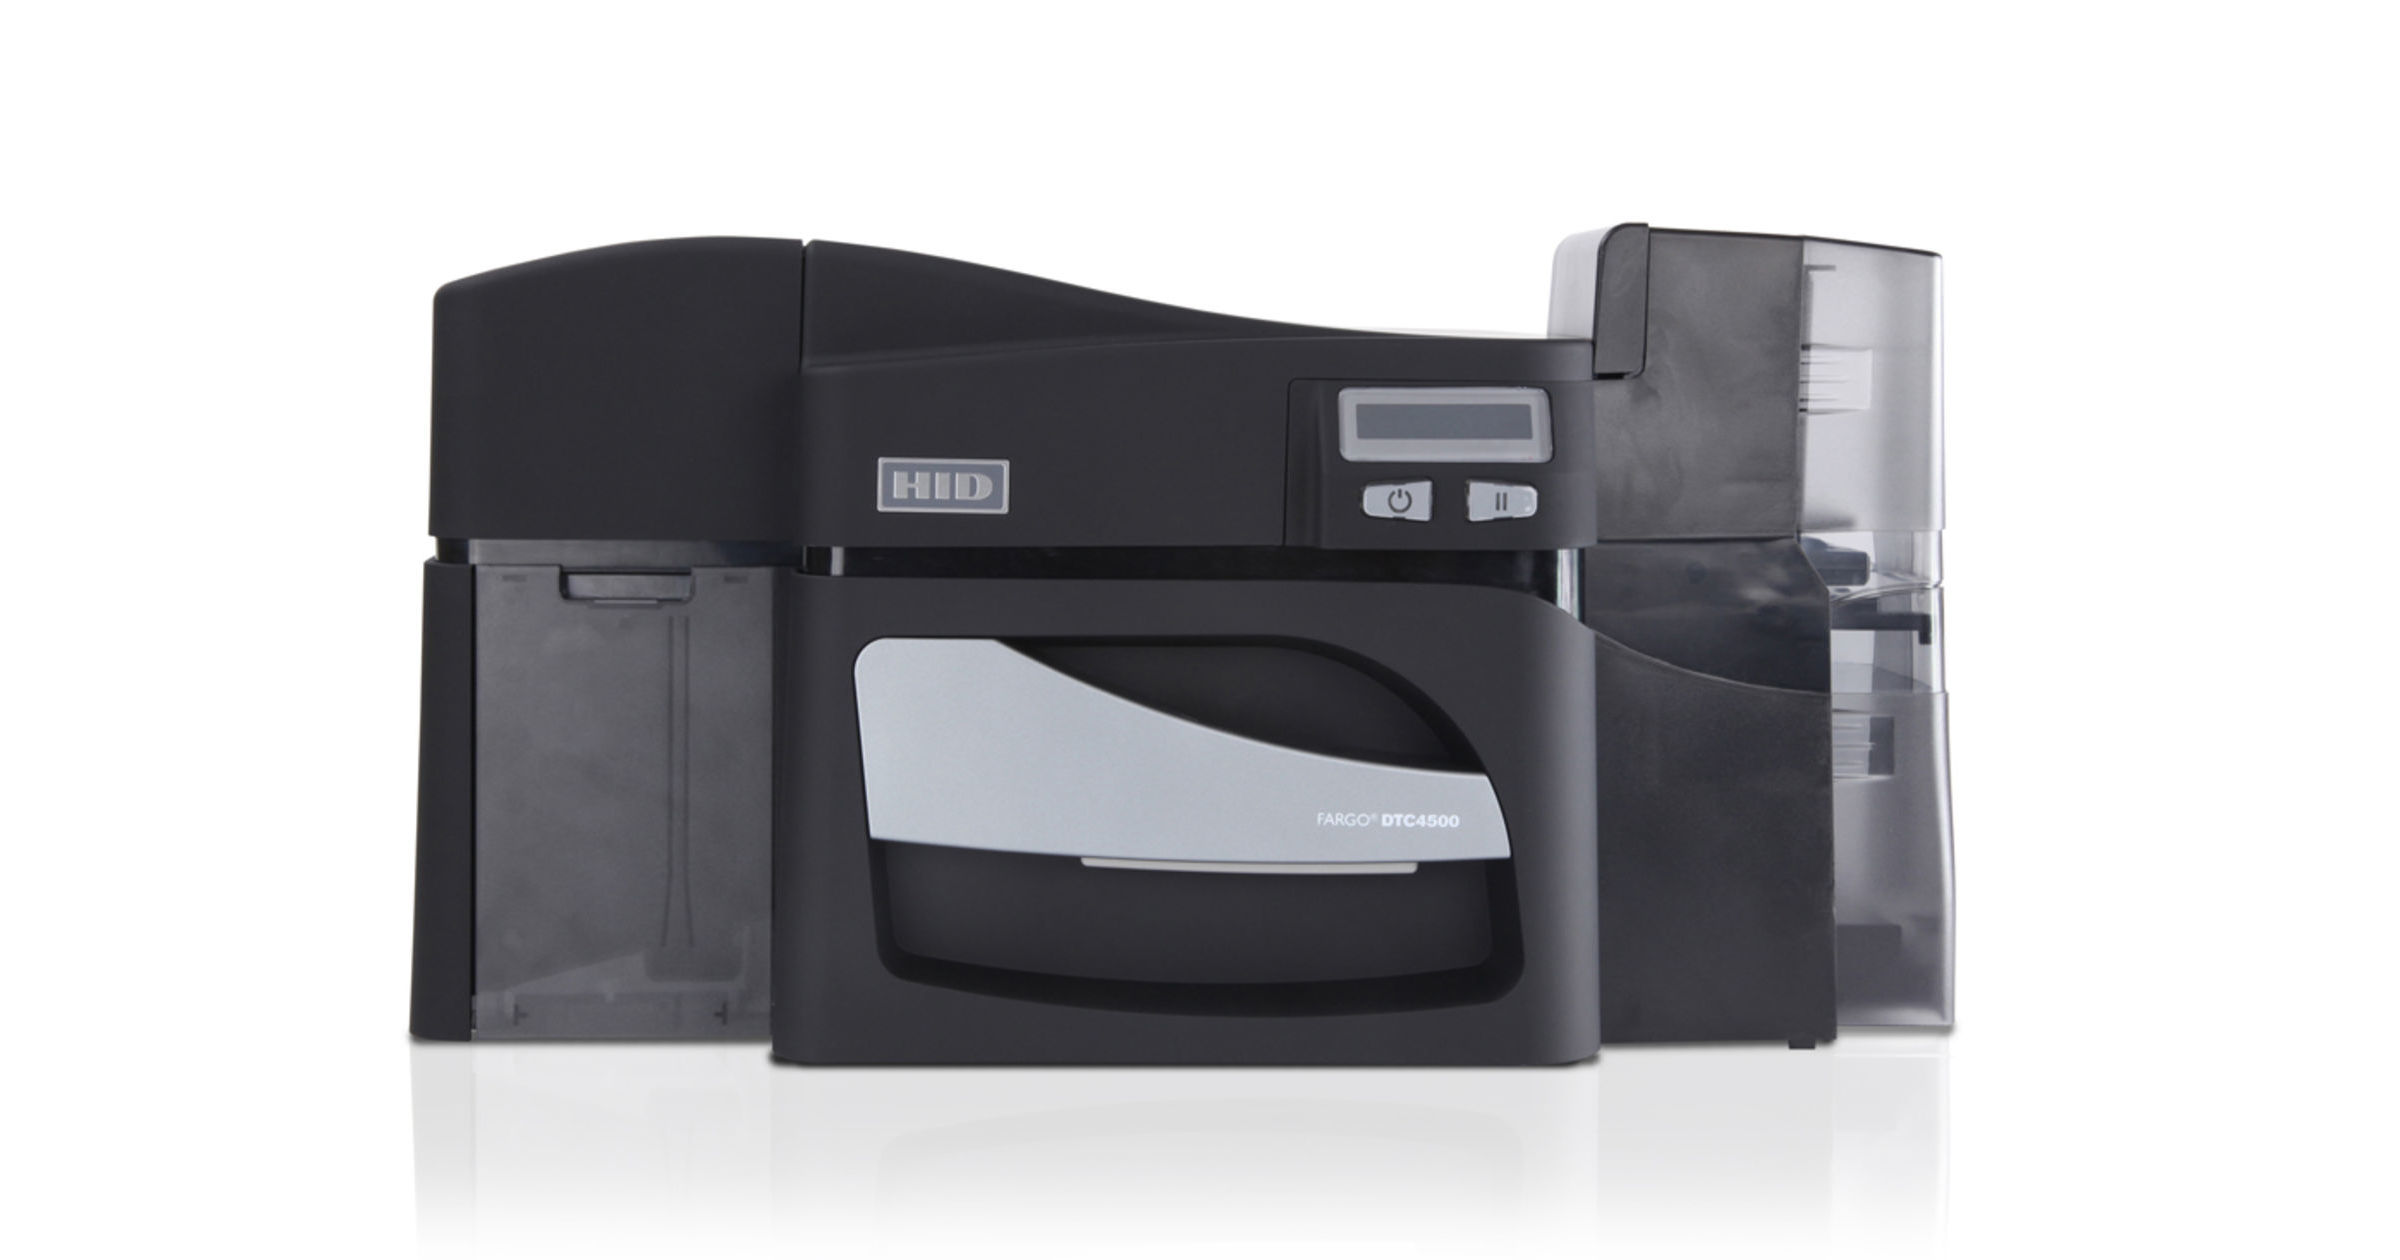 fargo dtc1000 printer driver